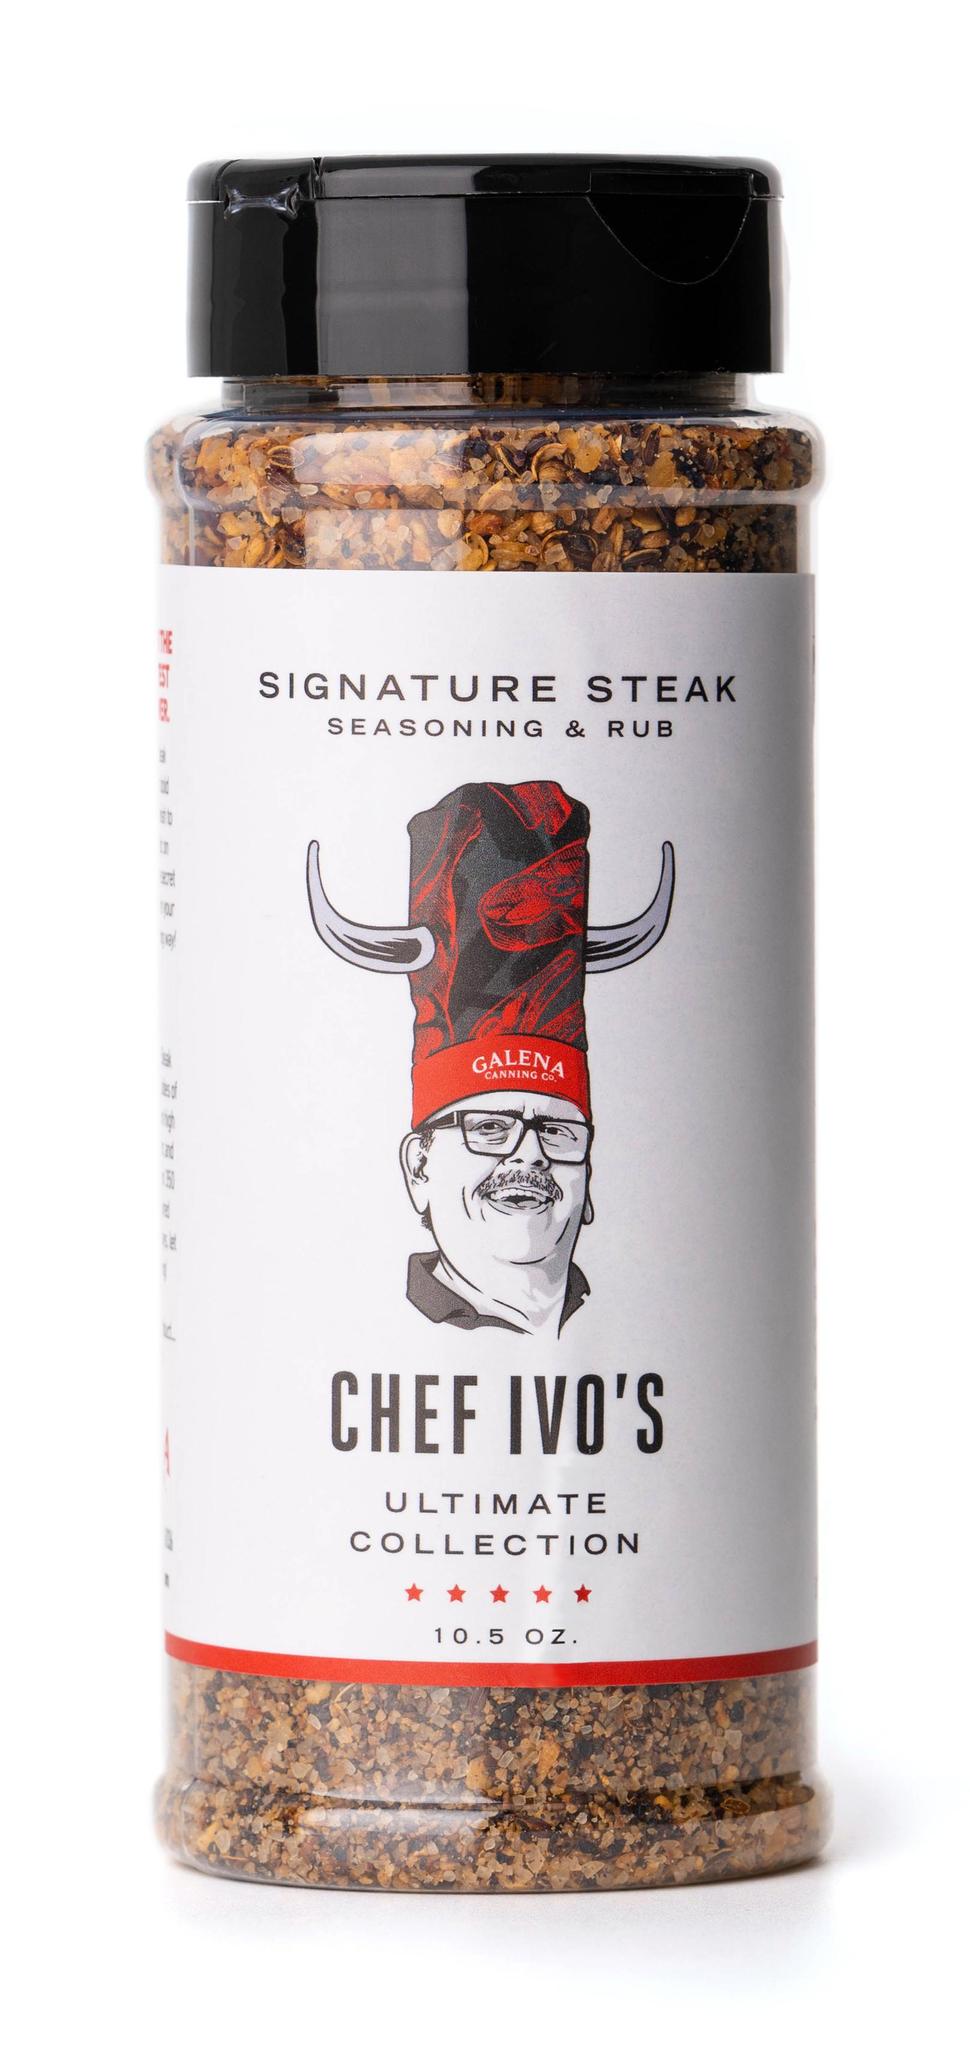 Chef Ivo's Ultimate Signature Steak Seasoning (Robust Ribeye Rub)